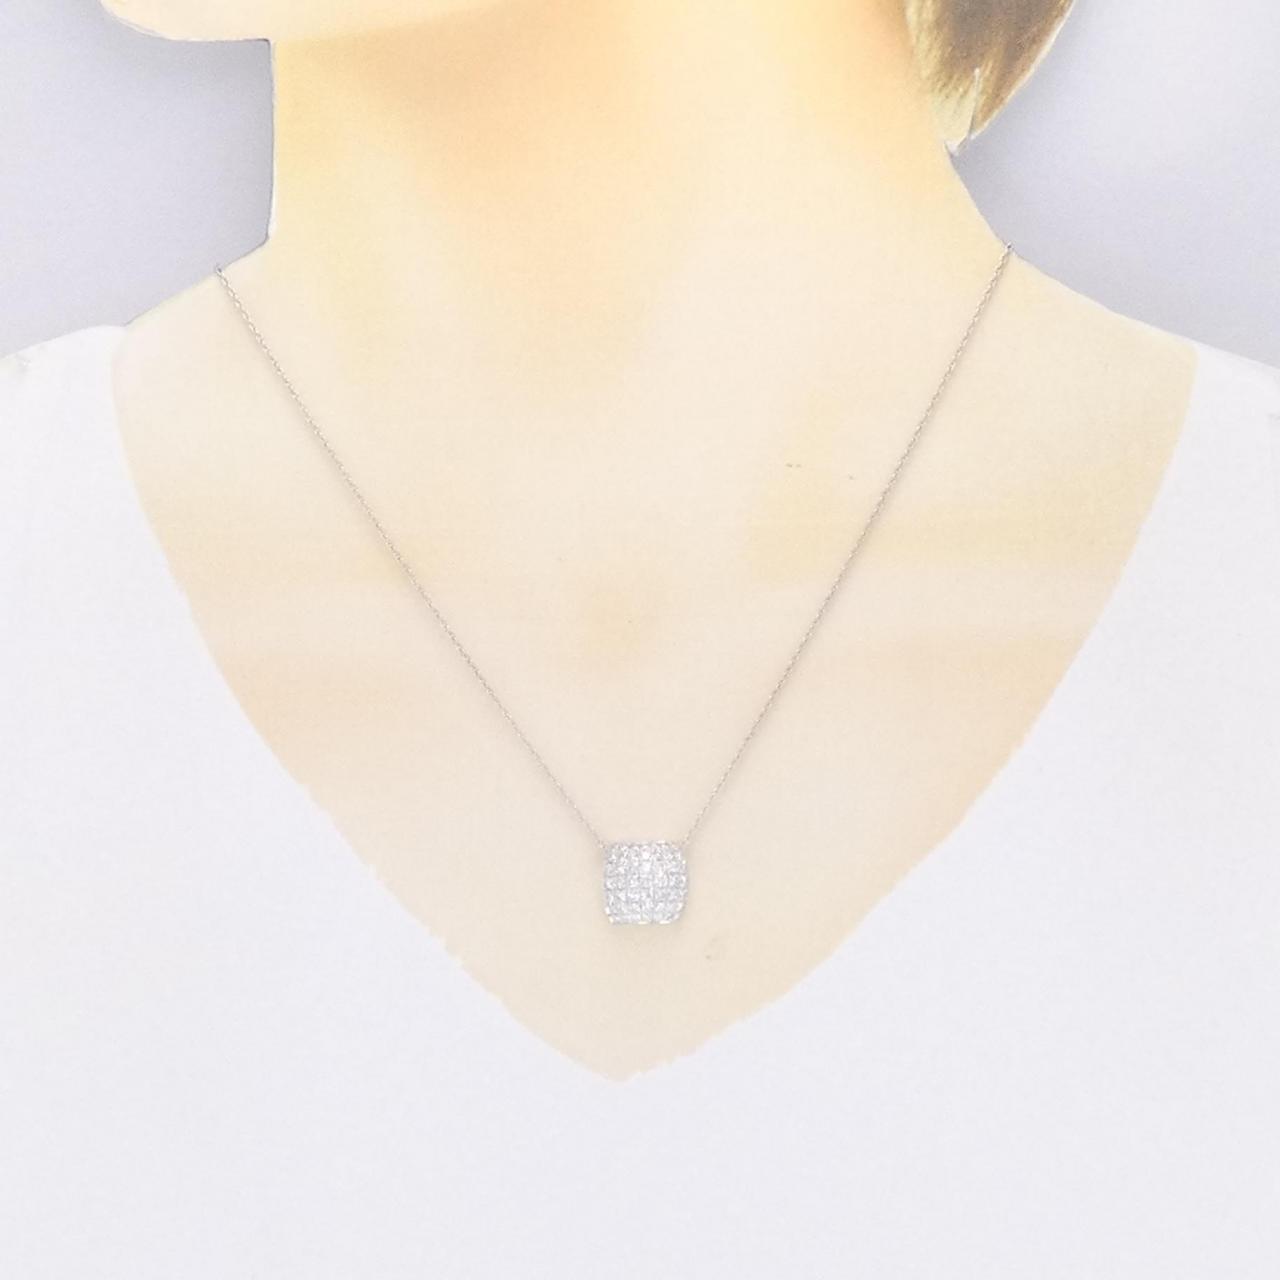 K18WG pave Diamond necklace 0.99CT